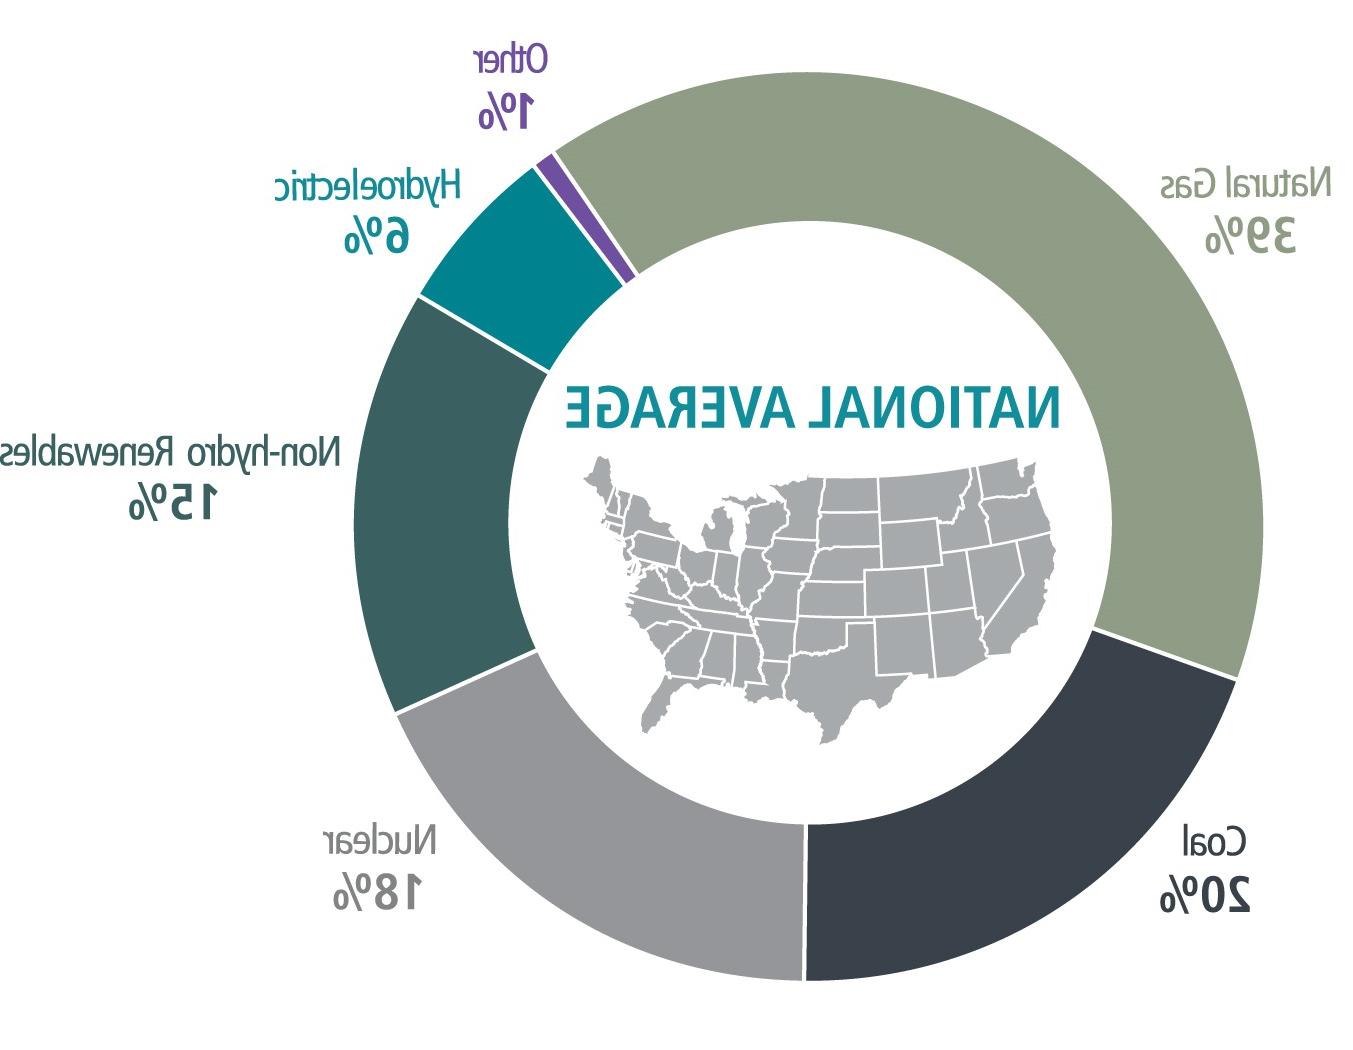 donut chart showing 2022 national average energy mix: 38% natural gas, 22%的煤, 19%的核, 13%非水力可再生能源, 6%的水电, 2%是其他